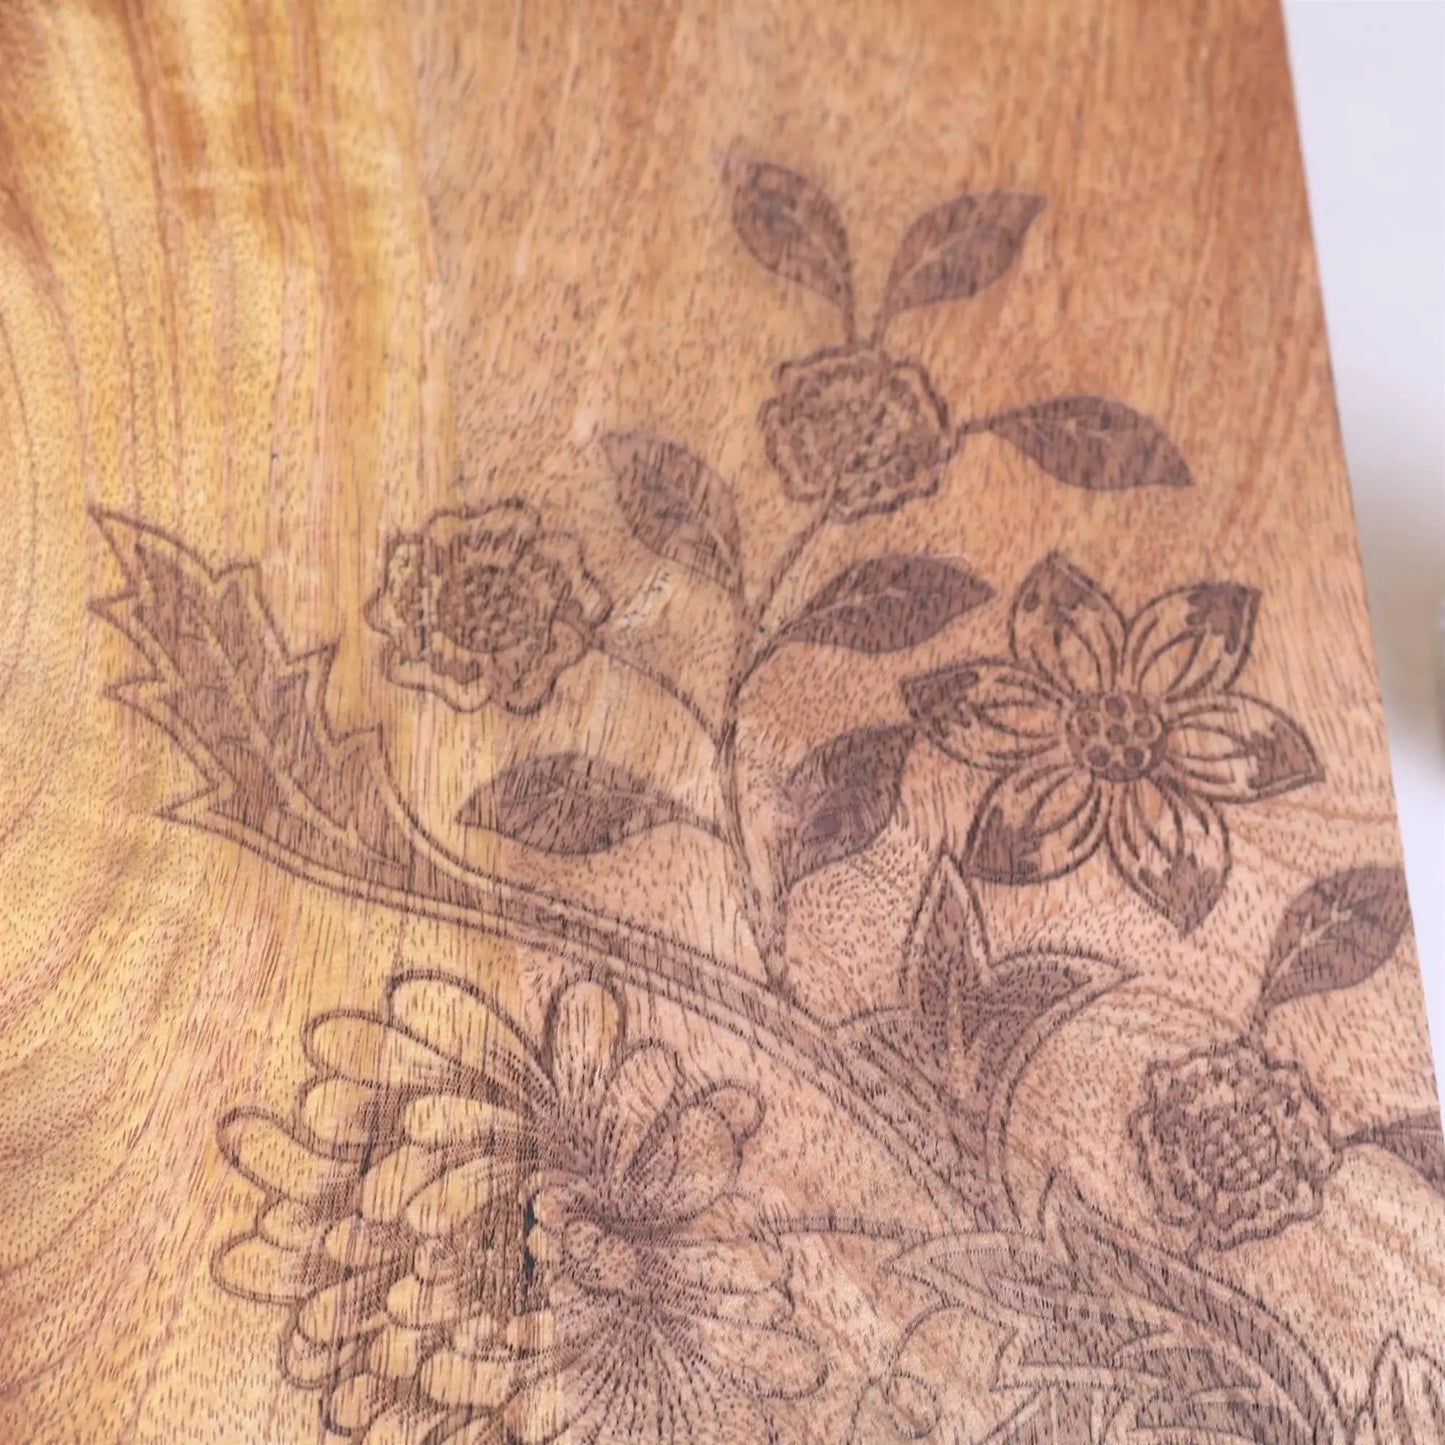 Tingda 30cm Engraved Serving Board - Closeup of Engraved Pattern